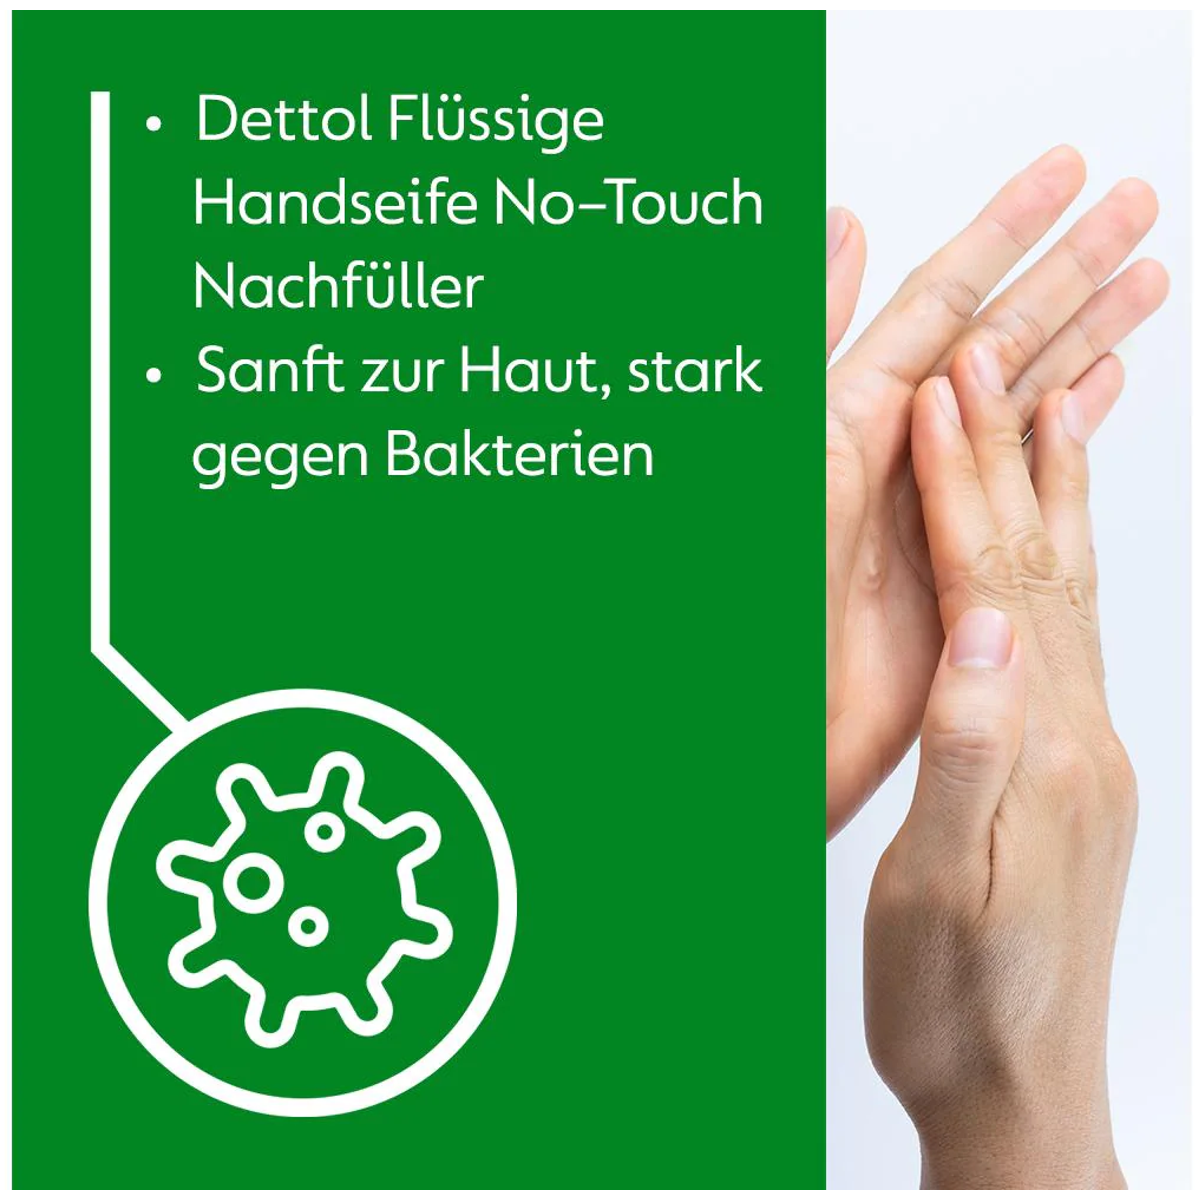 Dettol No-Touch flüssige Handseife